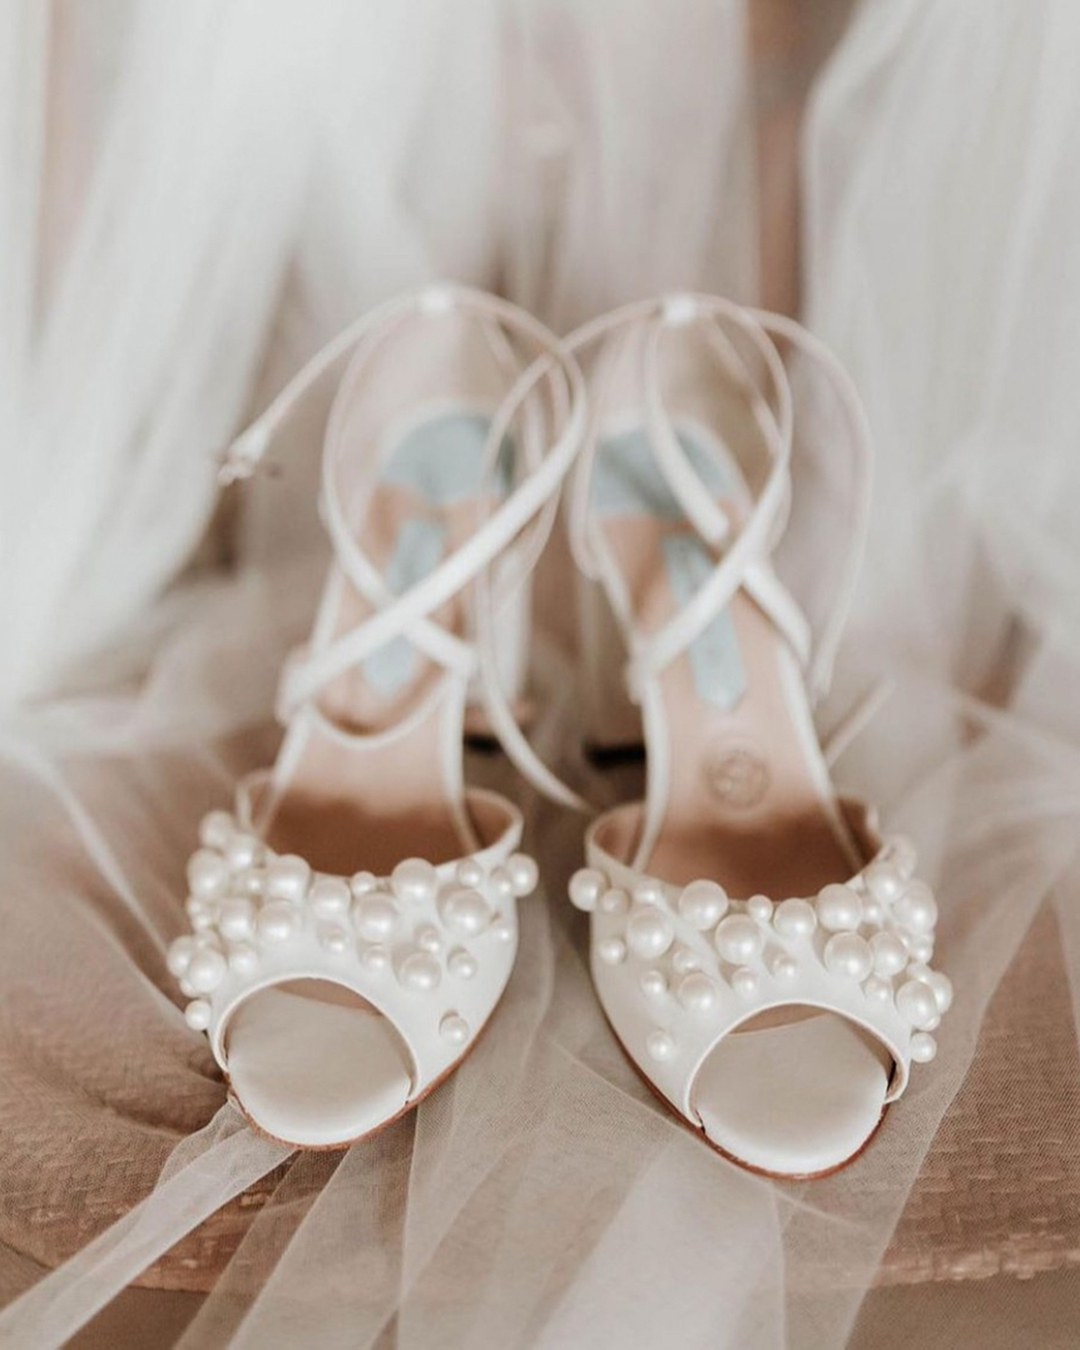 designer wedding shoes with pearls peep toe ivory charlottemillsshoes